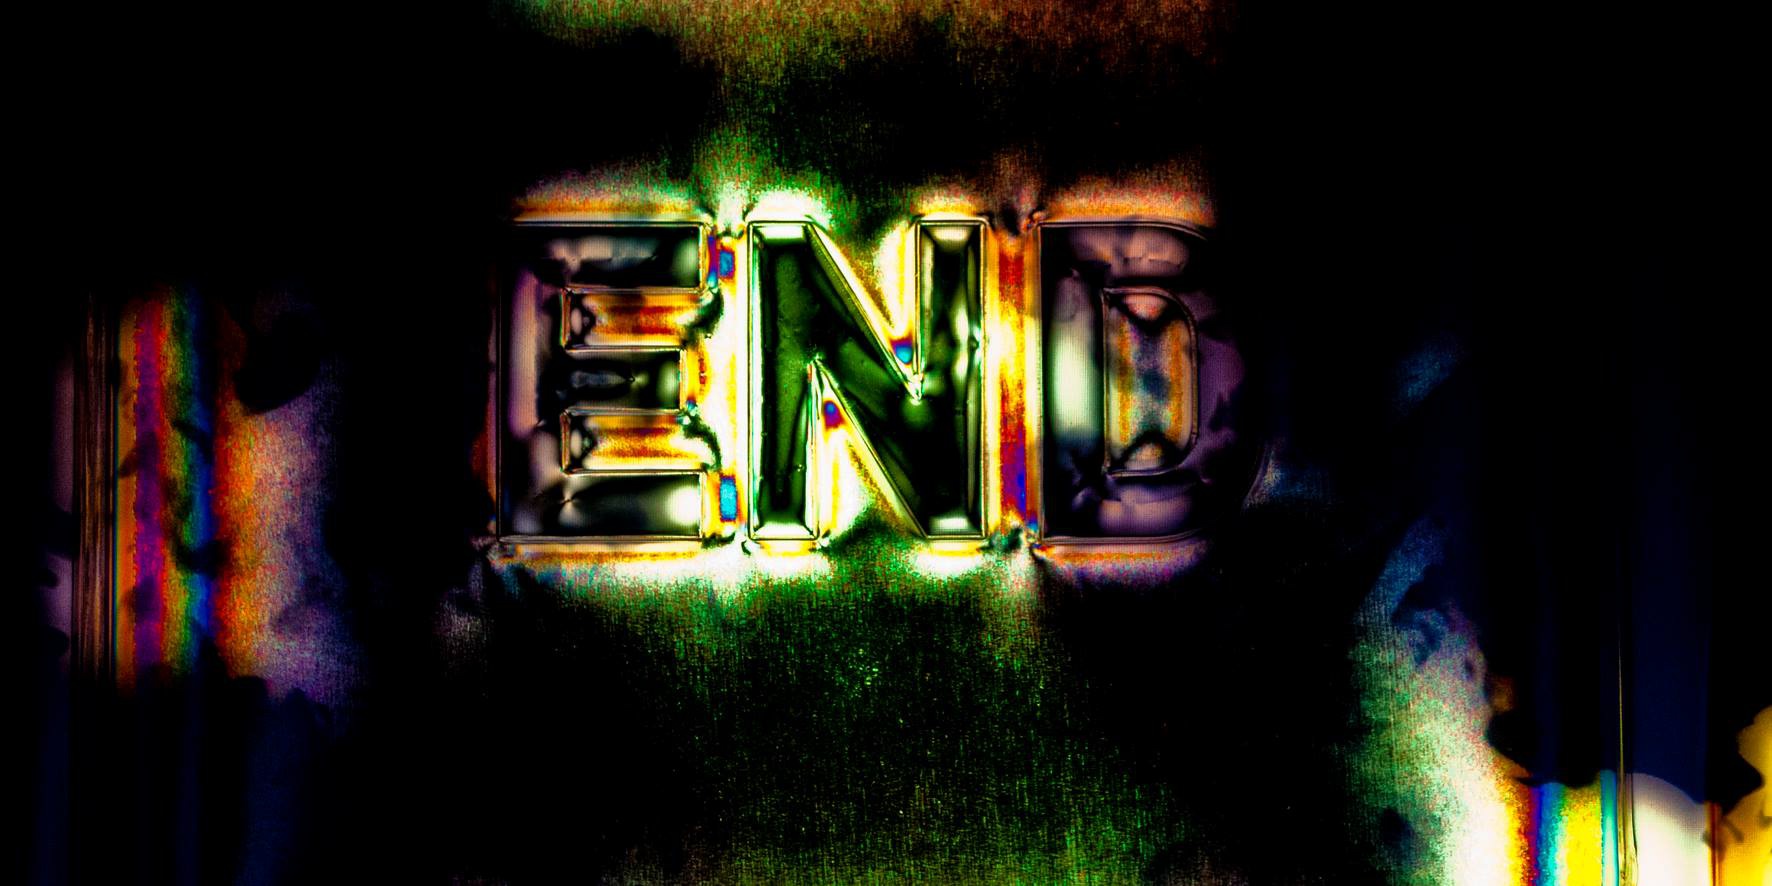 Benji 2012 film - Wikipedia